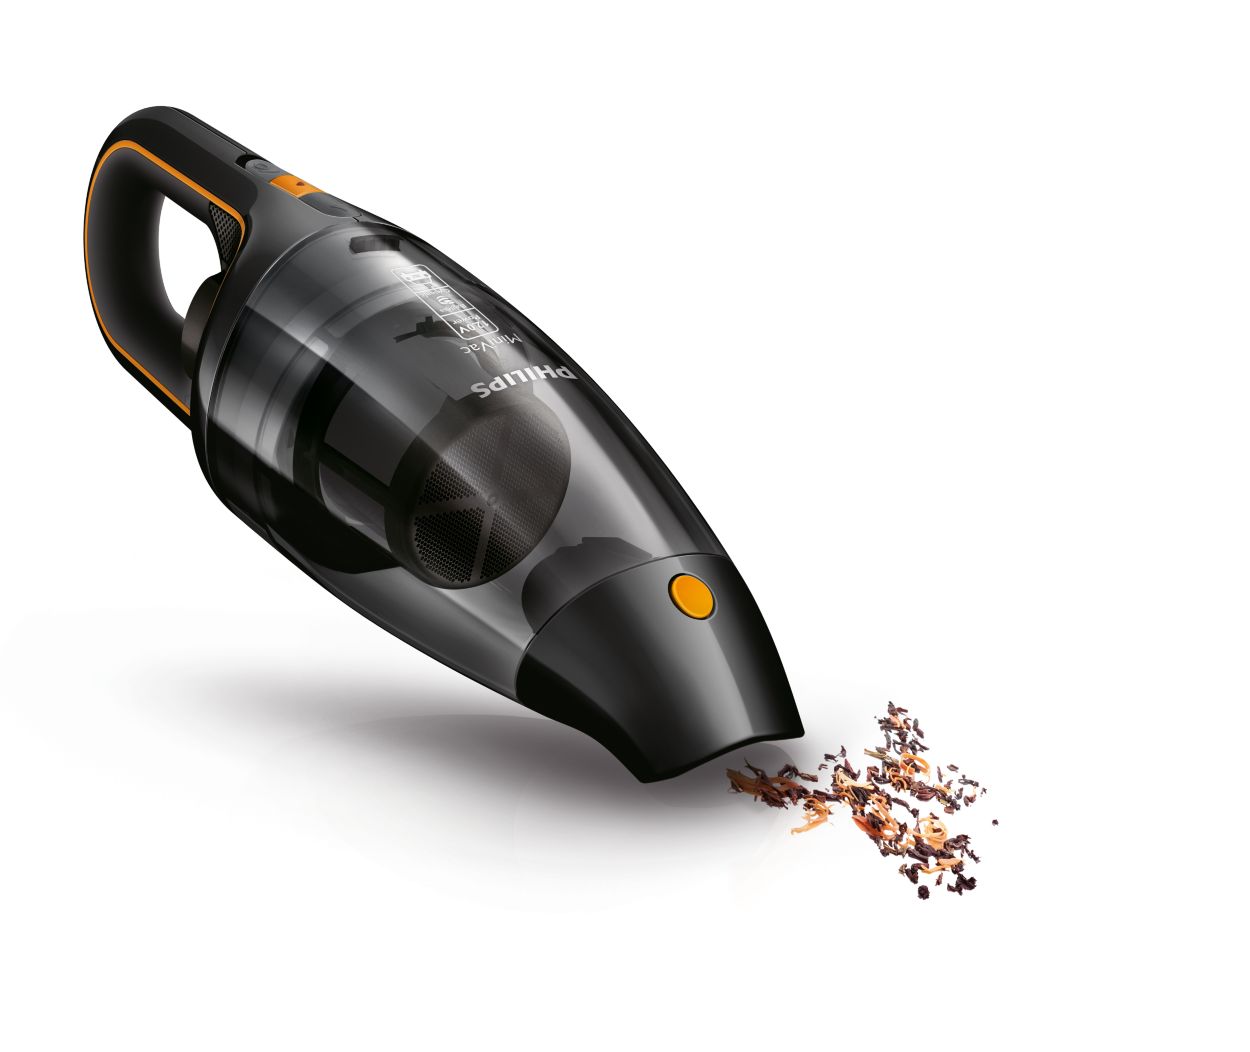 Minivac Handheld Vacuum Cleaner Fc6149 61 Philips